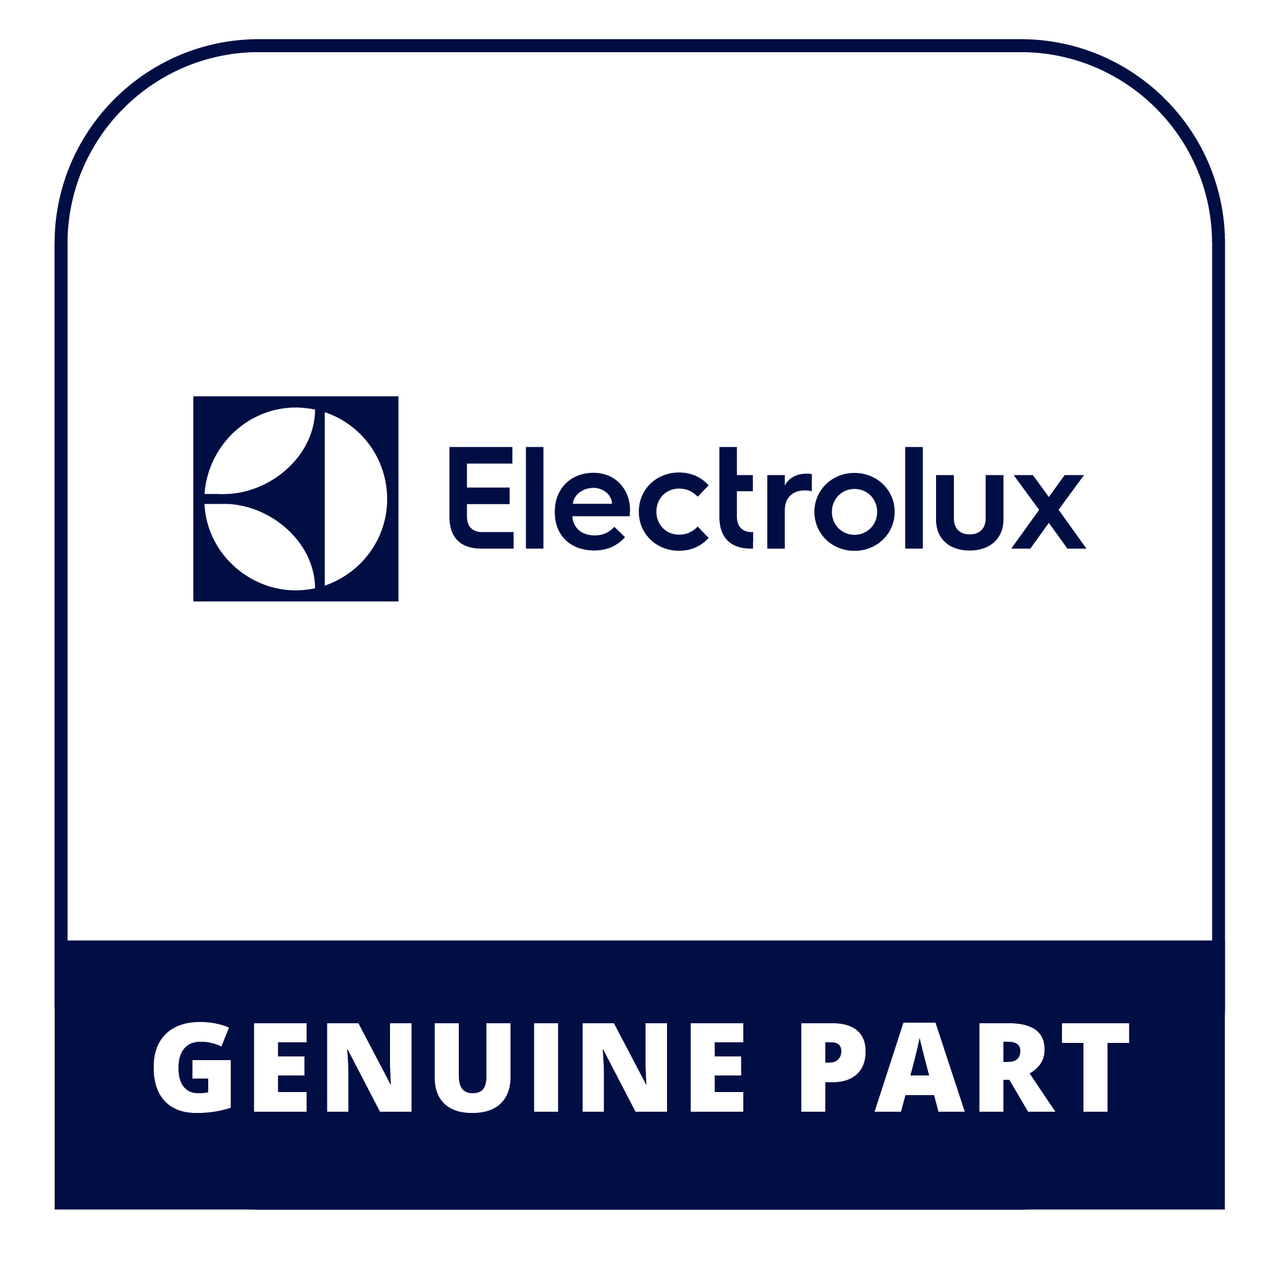 Frigidaire - Electrolux F21RMDEL Exterior Lowes - Genuine Electrolux Part